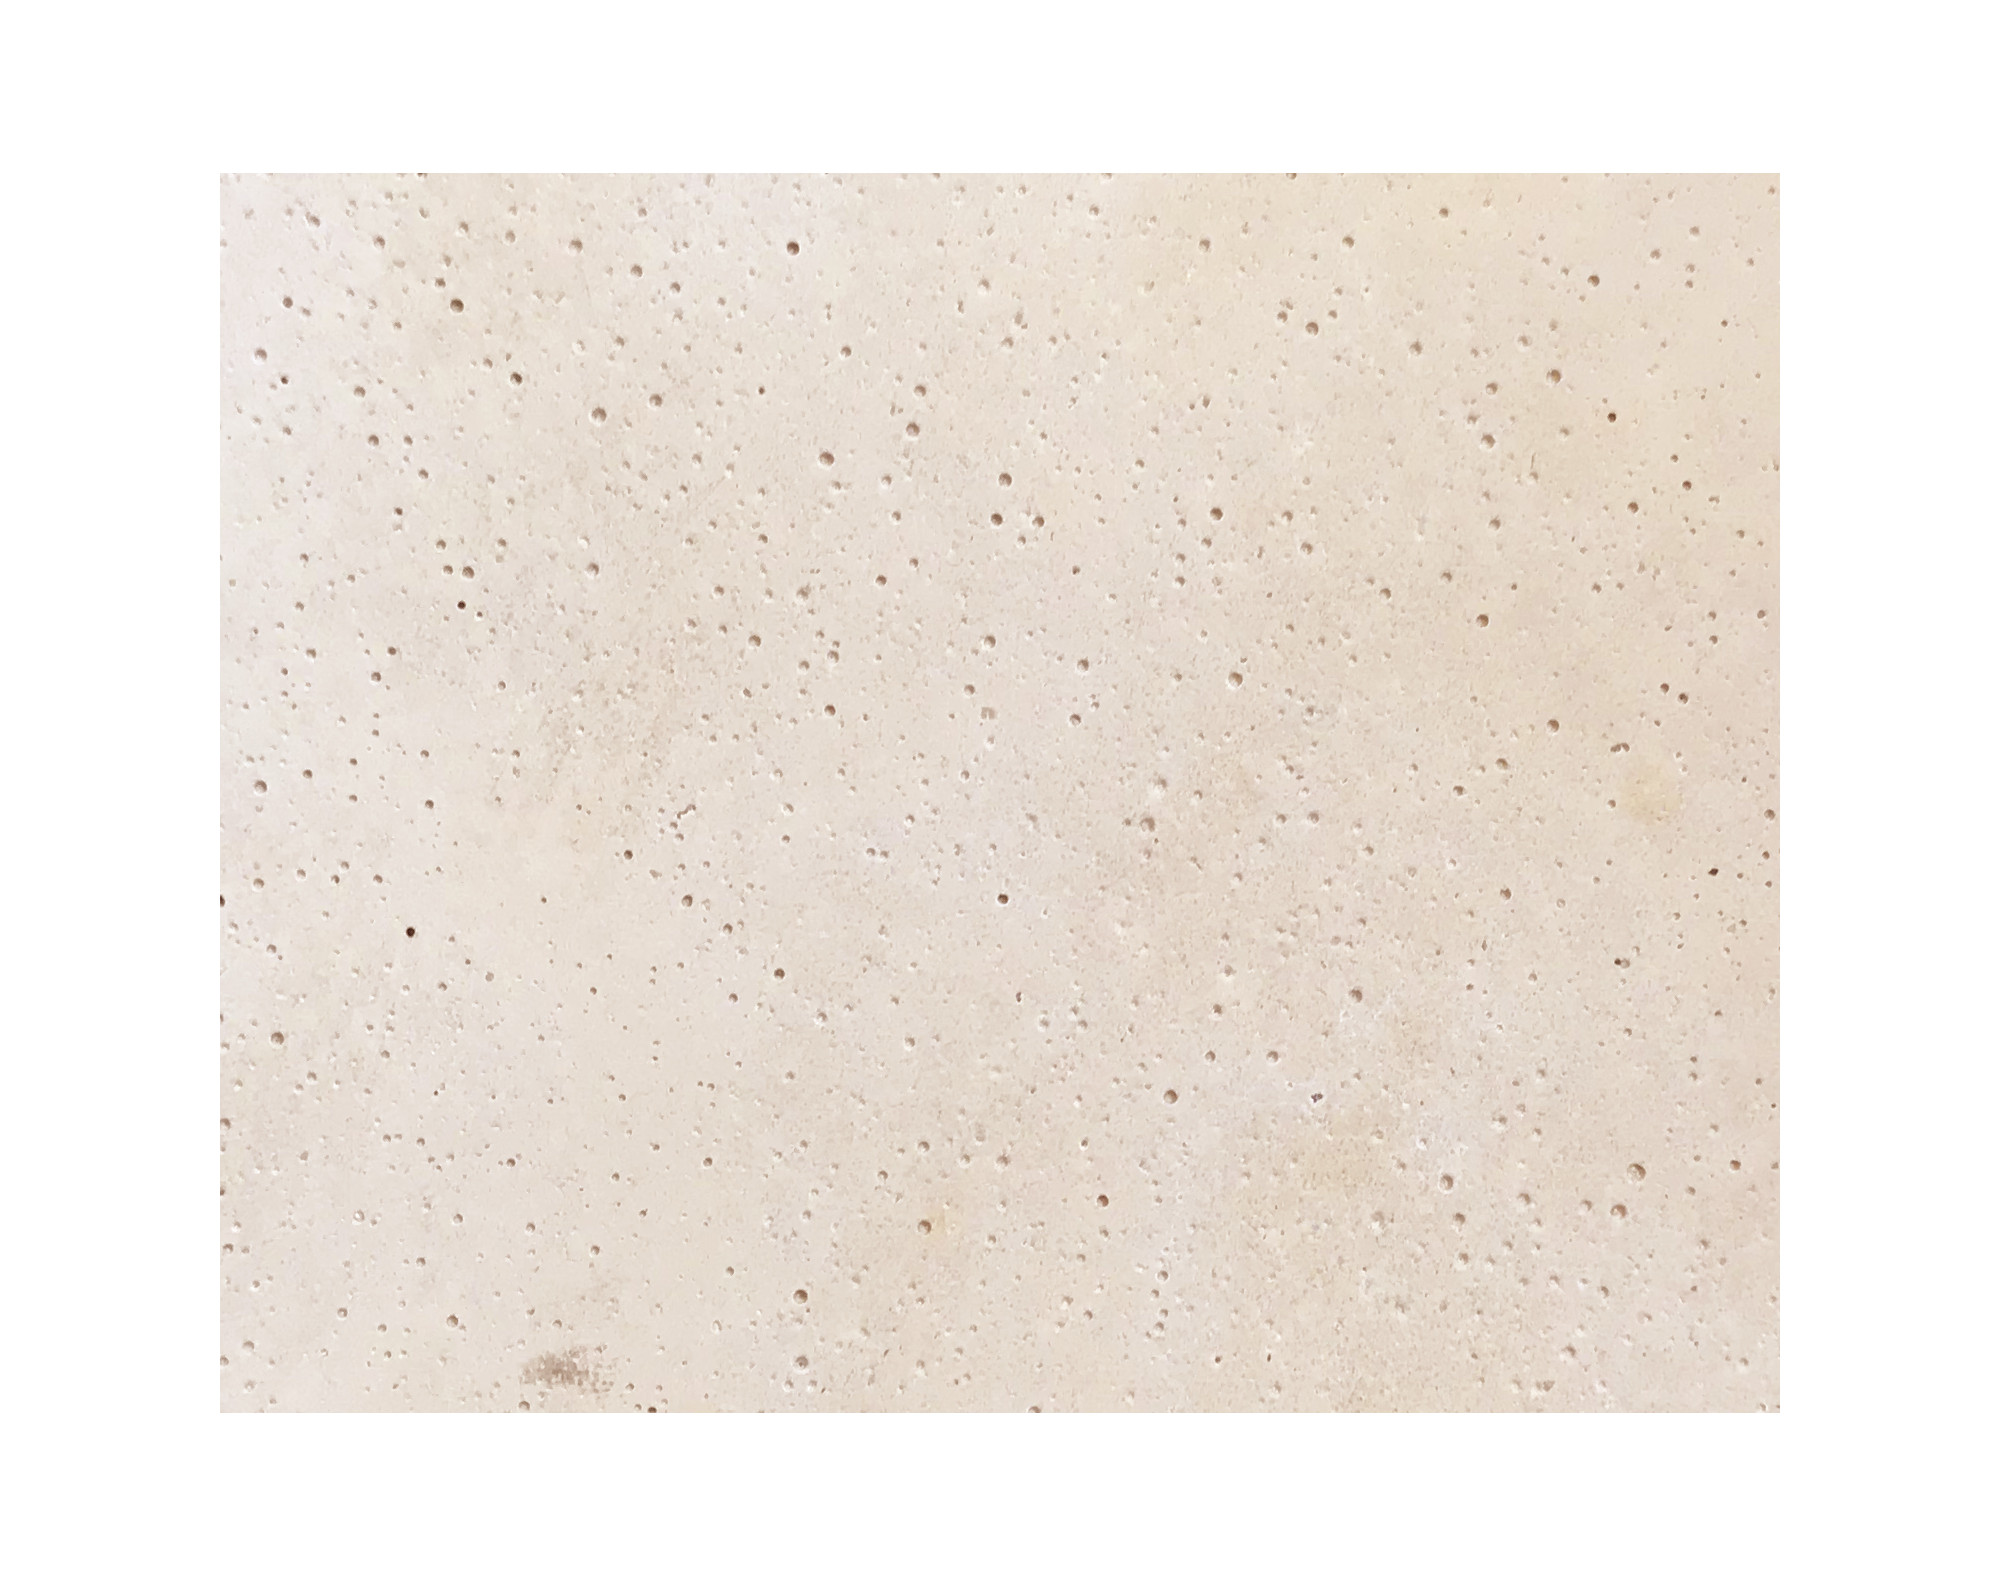 Harmo roc romaset, olympia-serie, ovaal d:3,50mx6,20m, indisch beige, beton